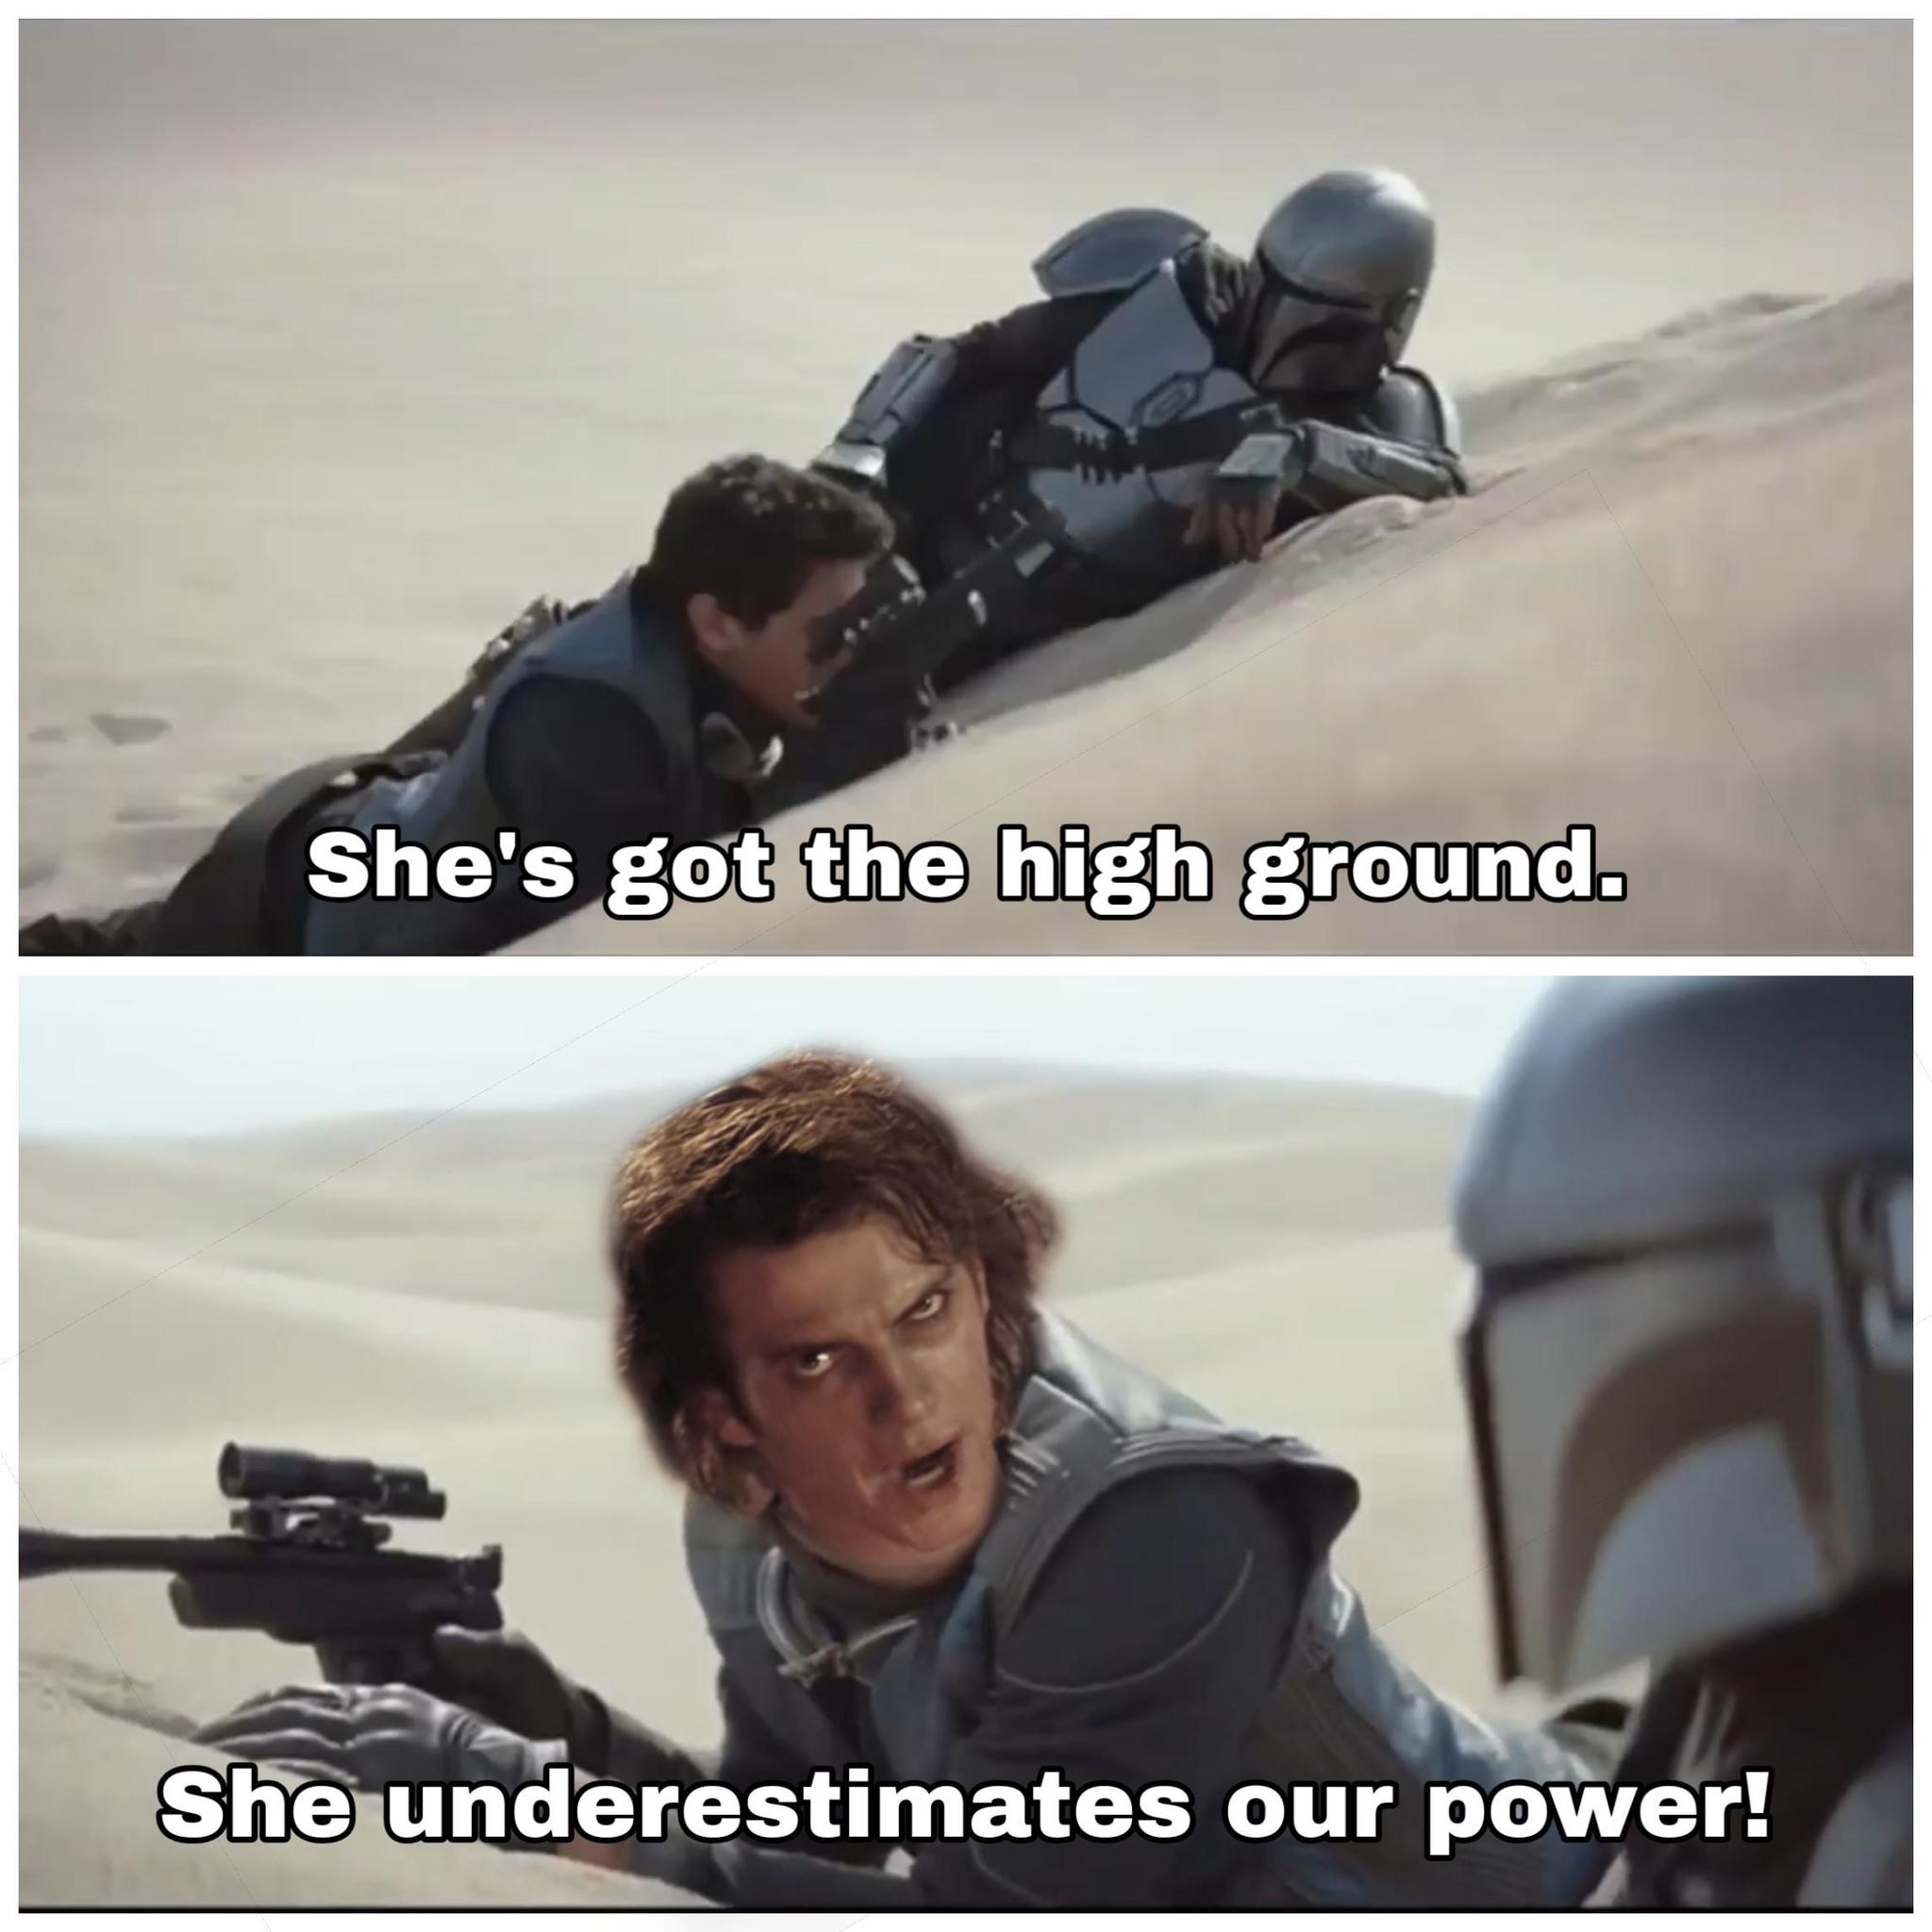 high ground - meme